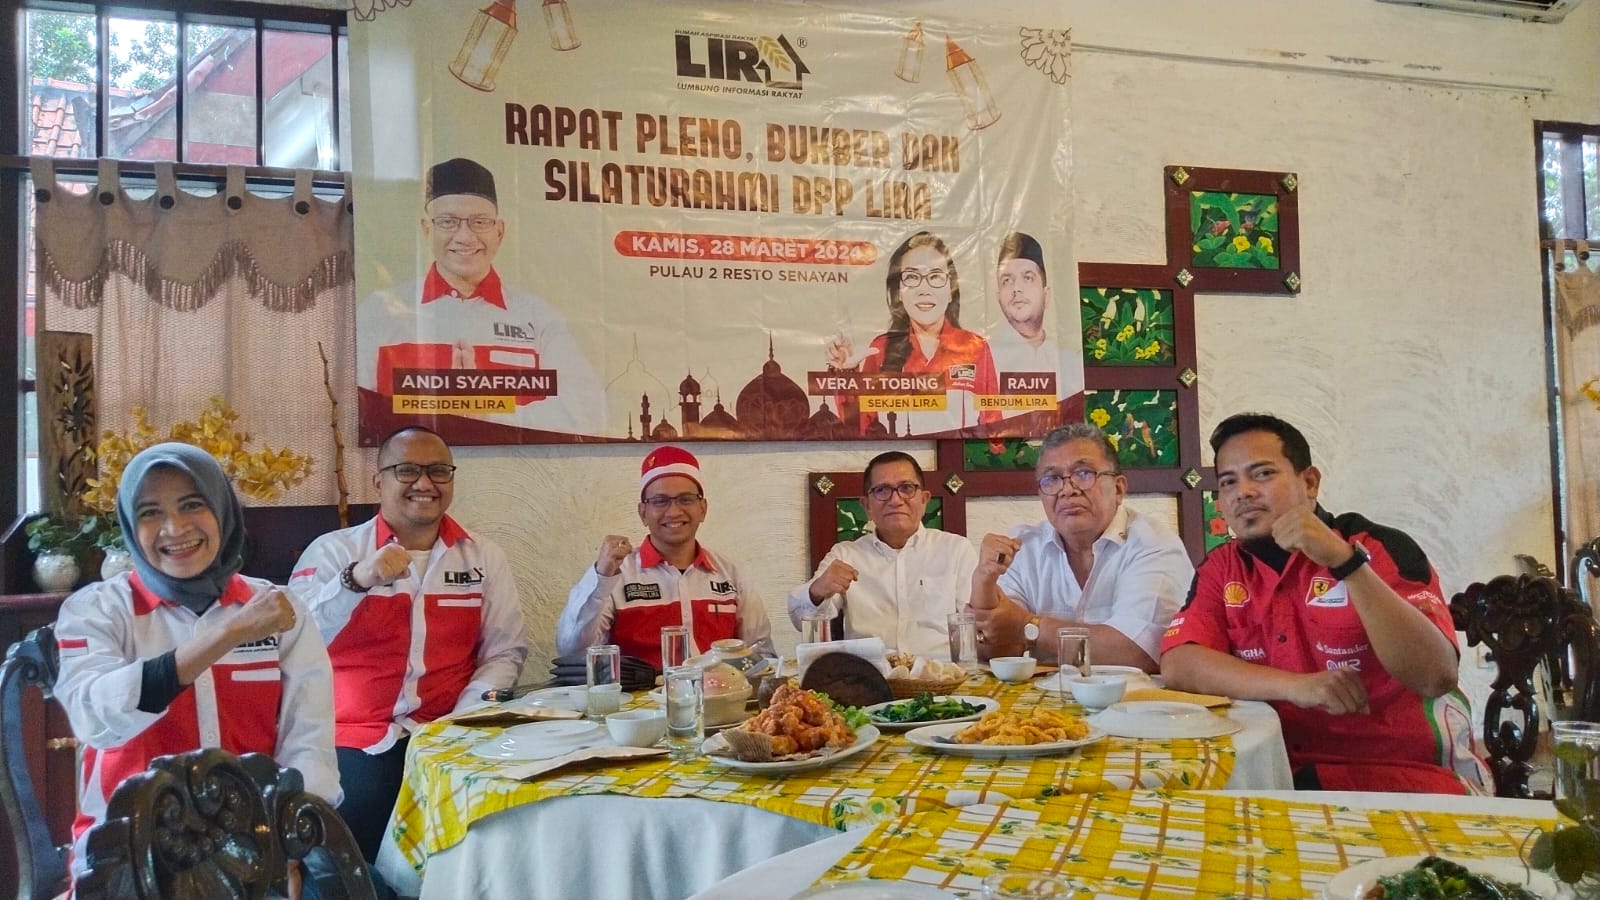 Foto Bersama DPP LIRA Kamis, 28 Maret 2024. /dok:LIRA